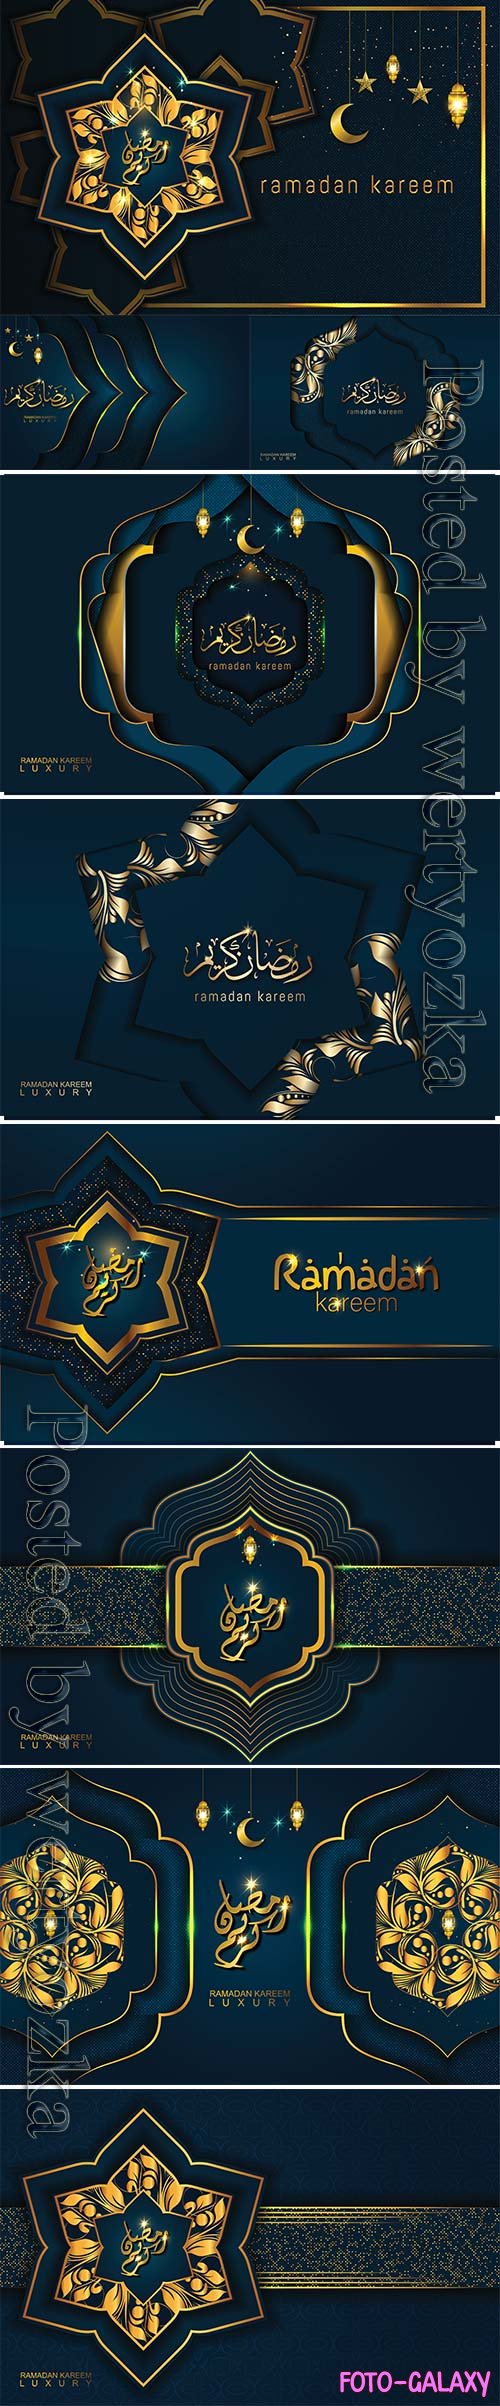 Ramadan Kareem in luxury style with arabic calligraphy